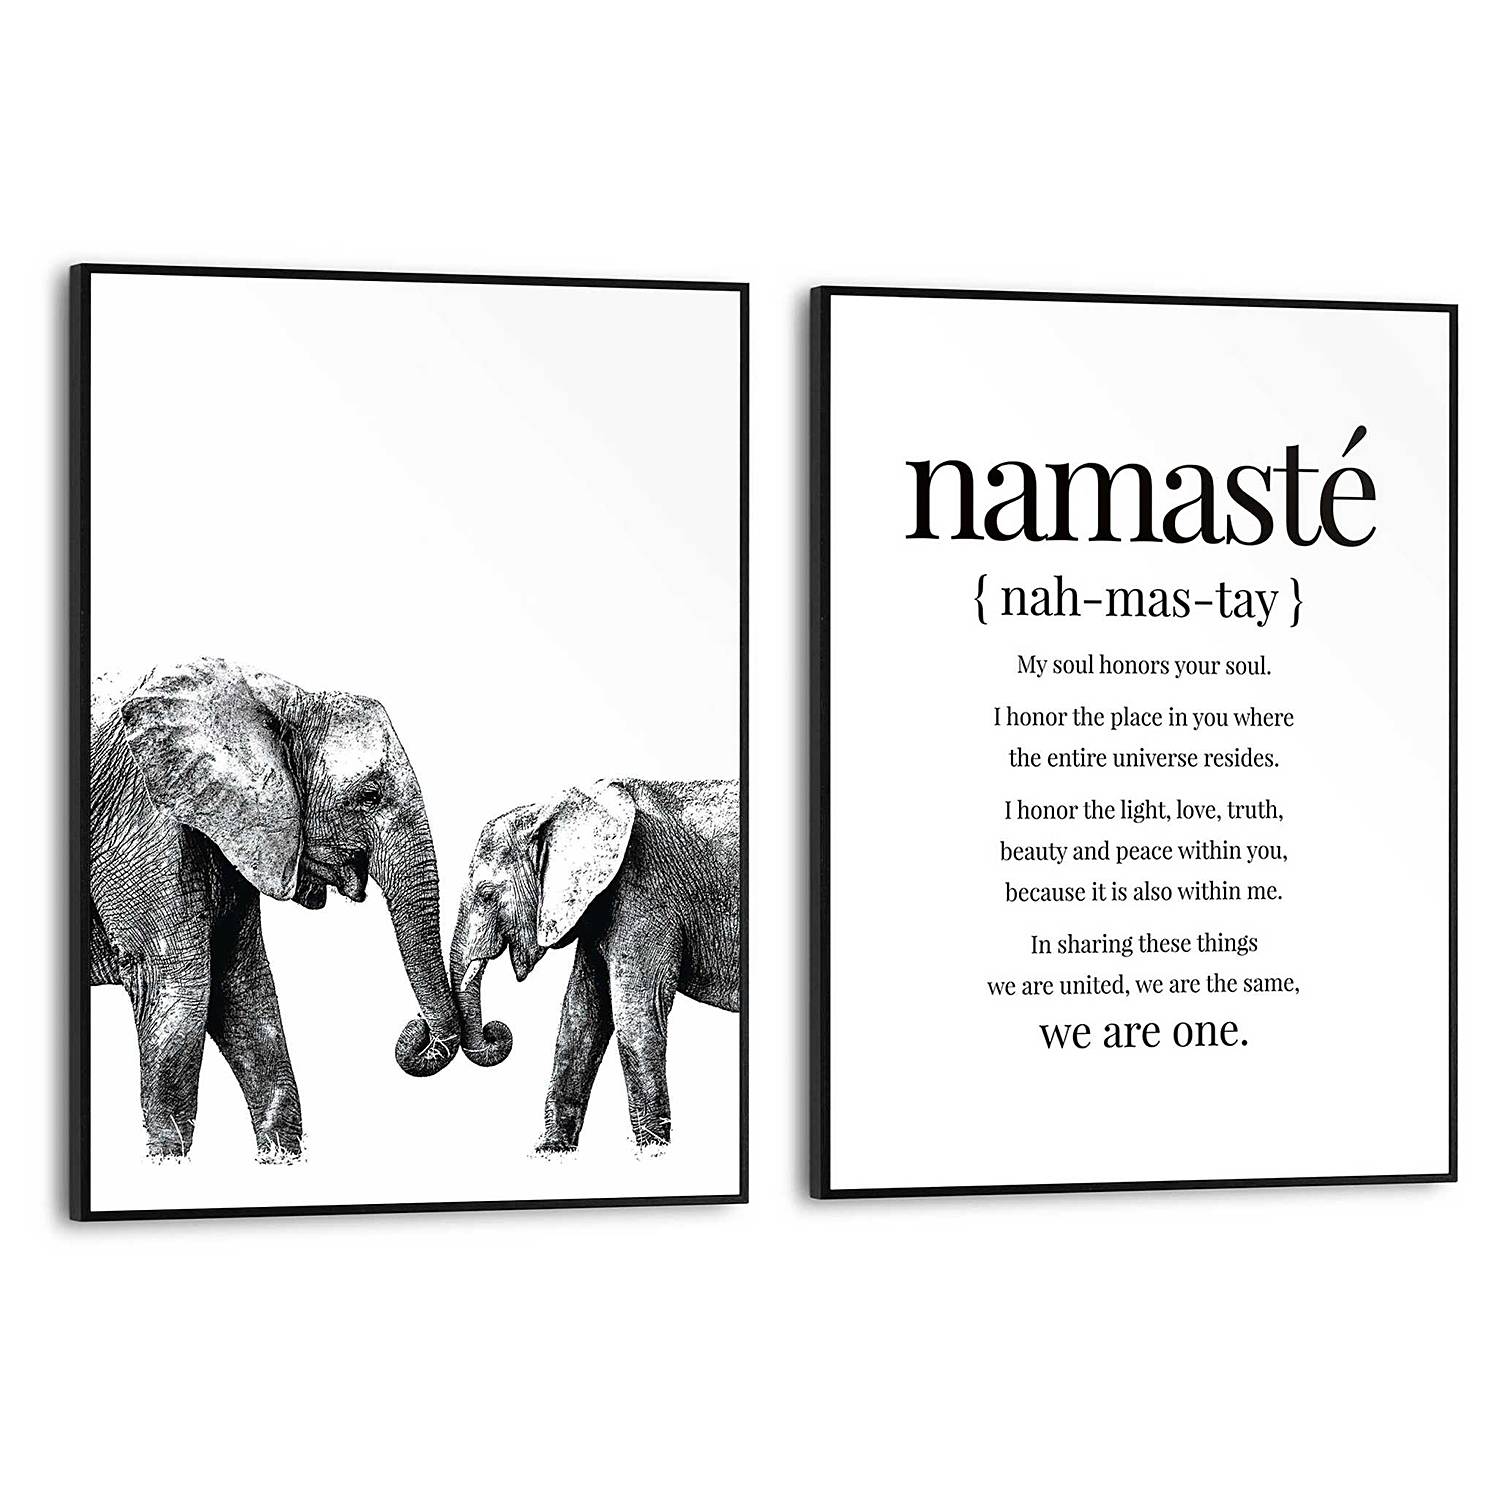 Wandbild Loving Namasté 2-teilig kaufen | home24